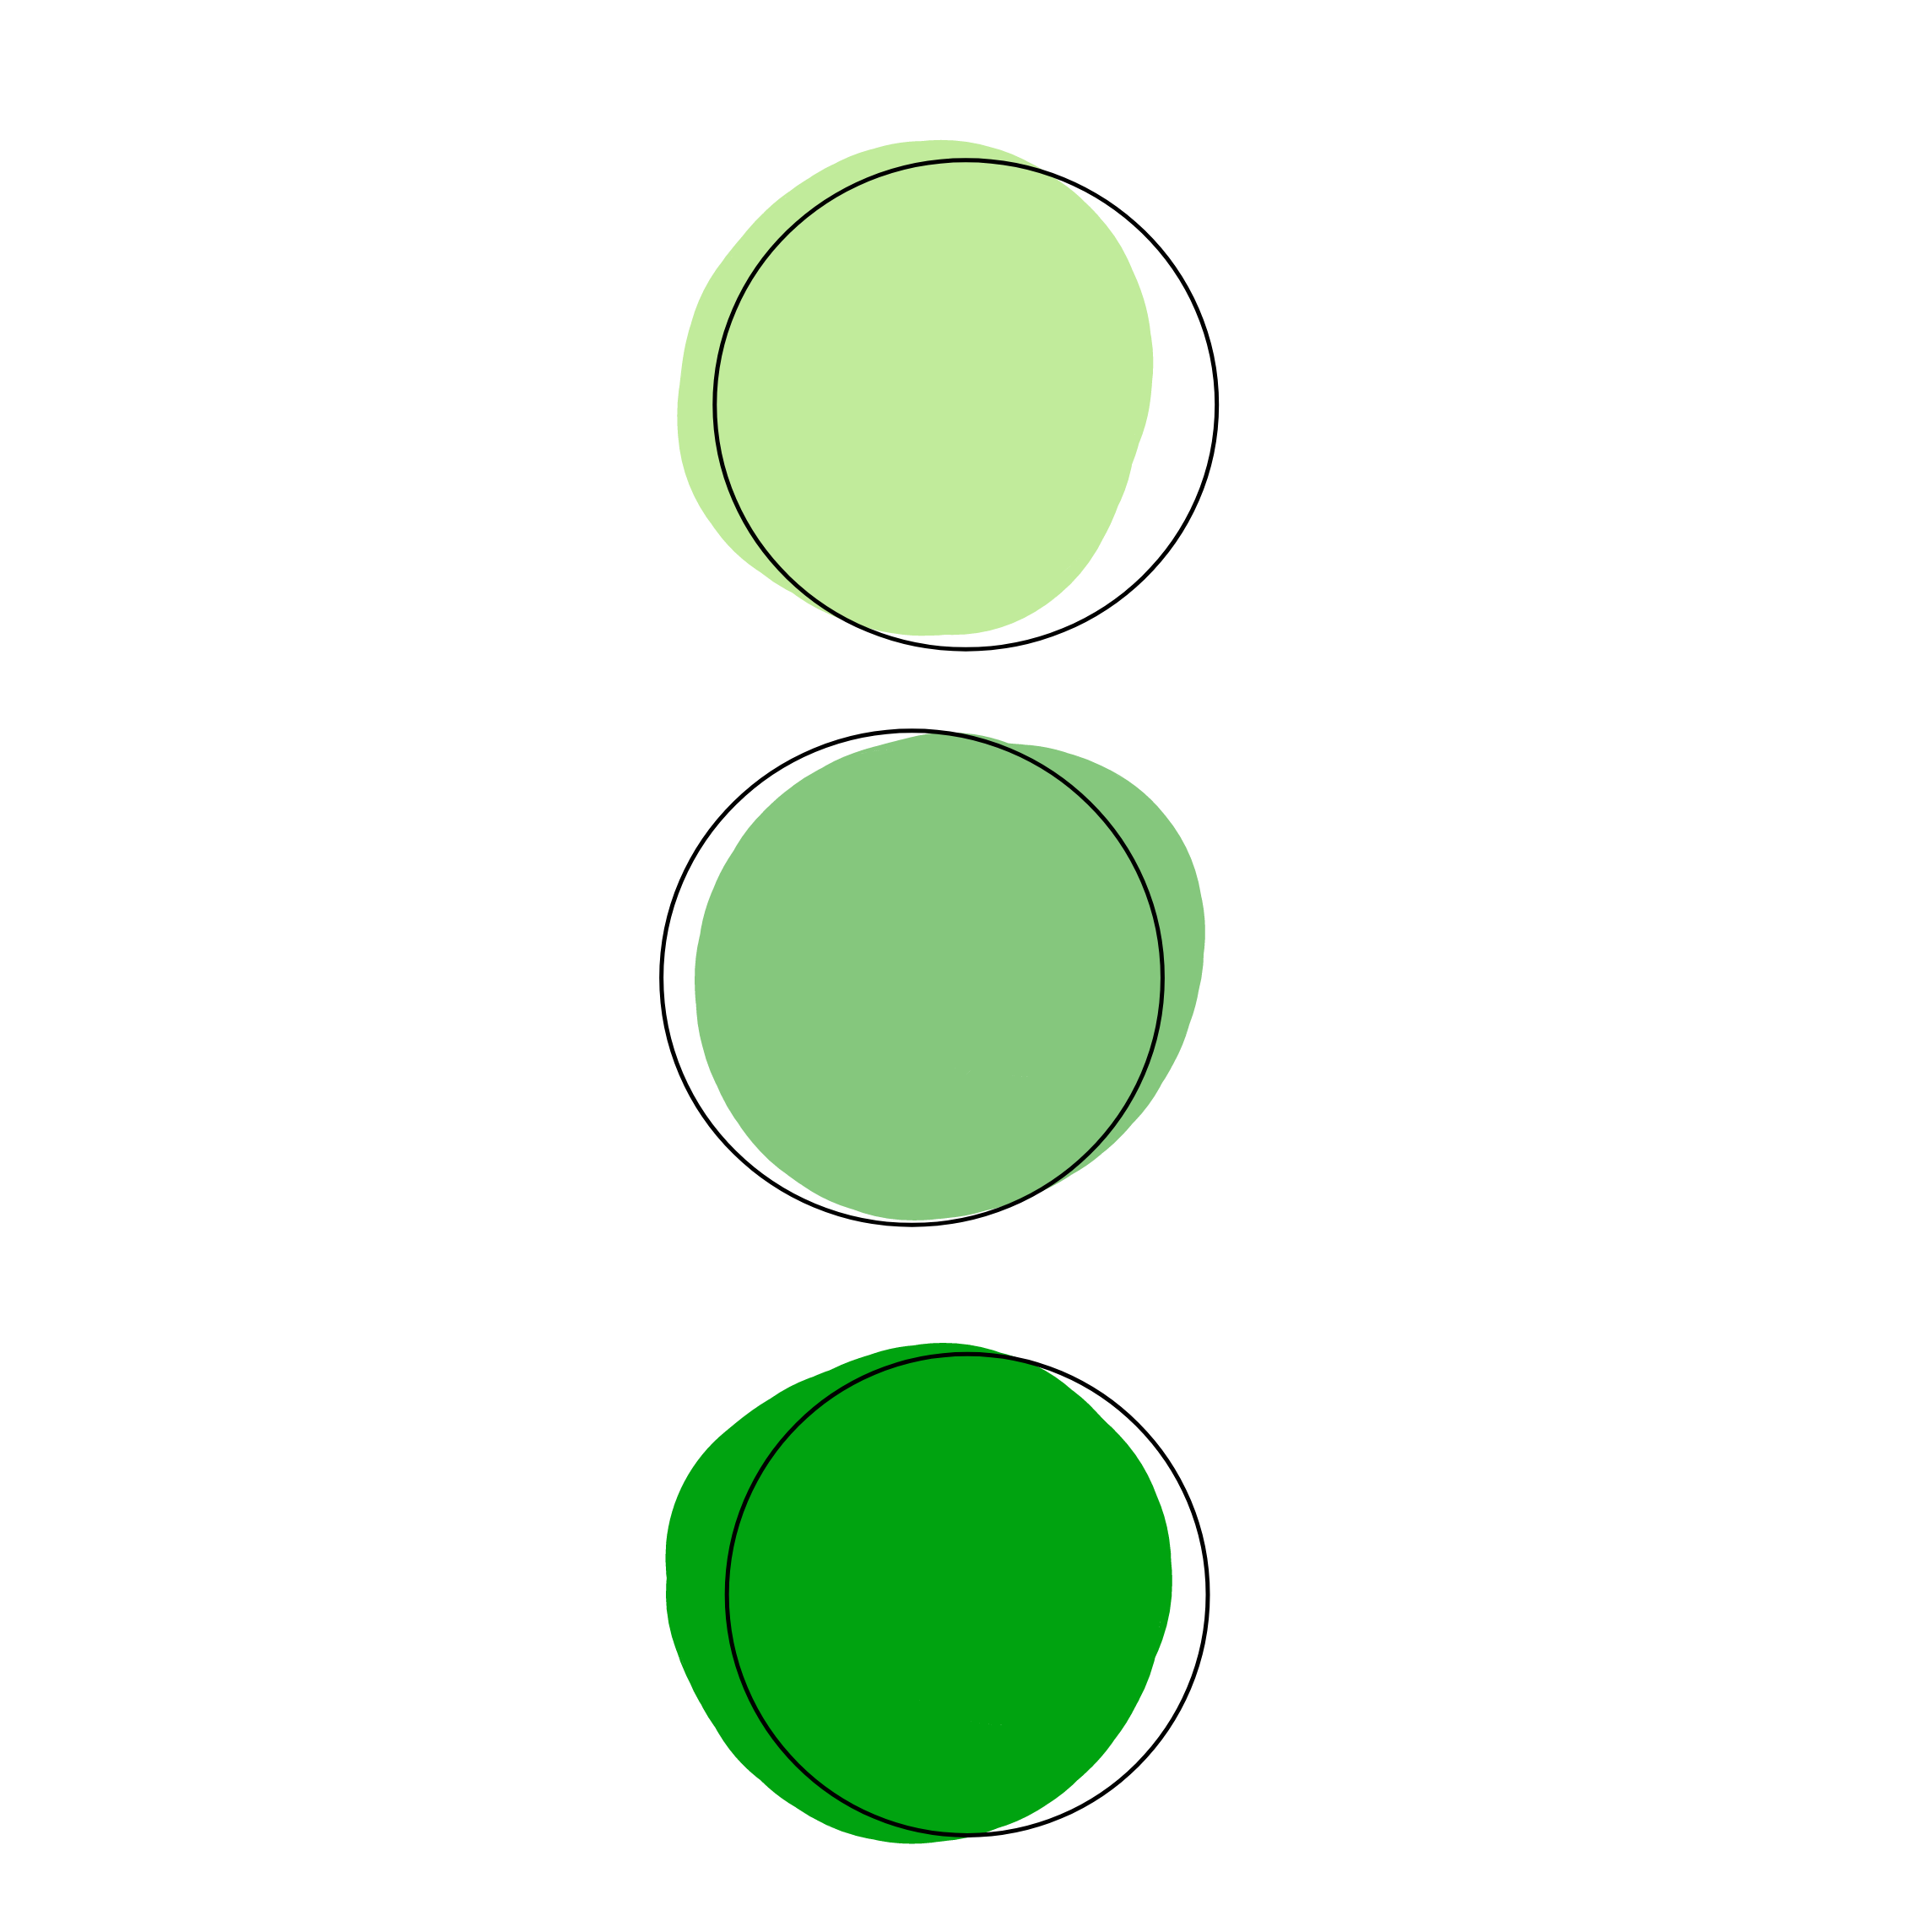 #aesthetic #circle #circles #colors #green #freetoedit